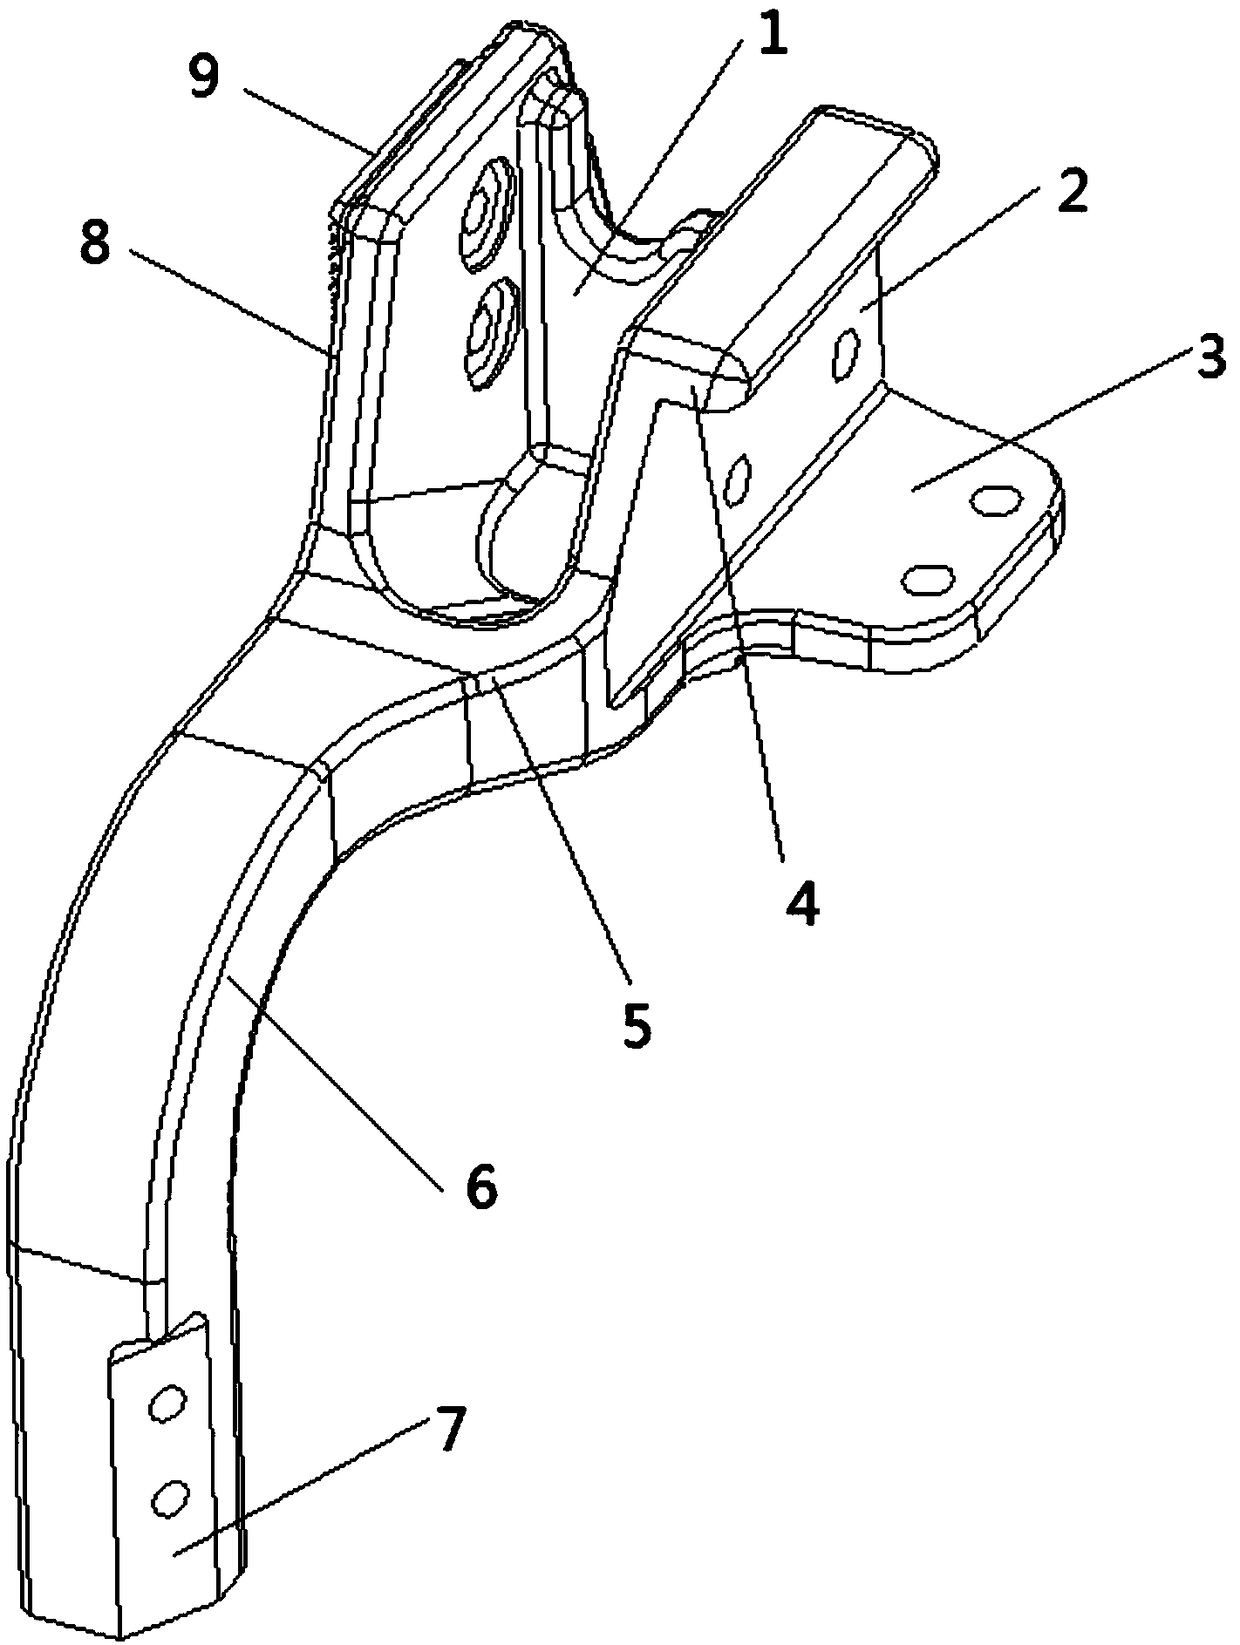 Novel mounting bracket of pilot and brake travel switch